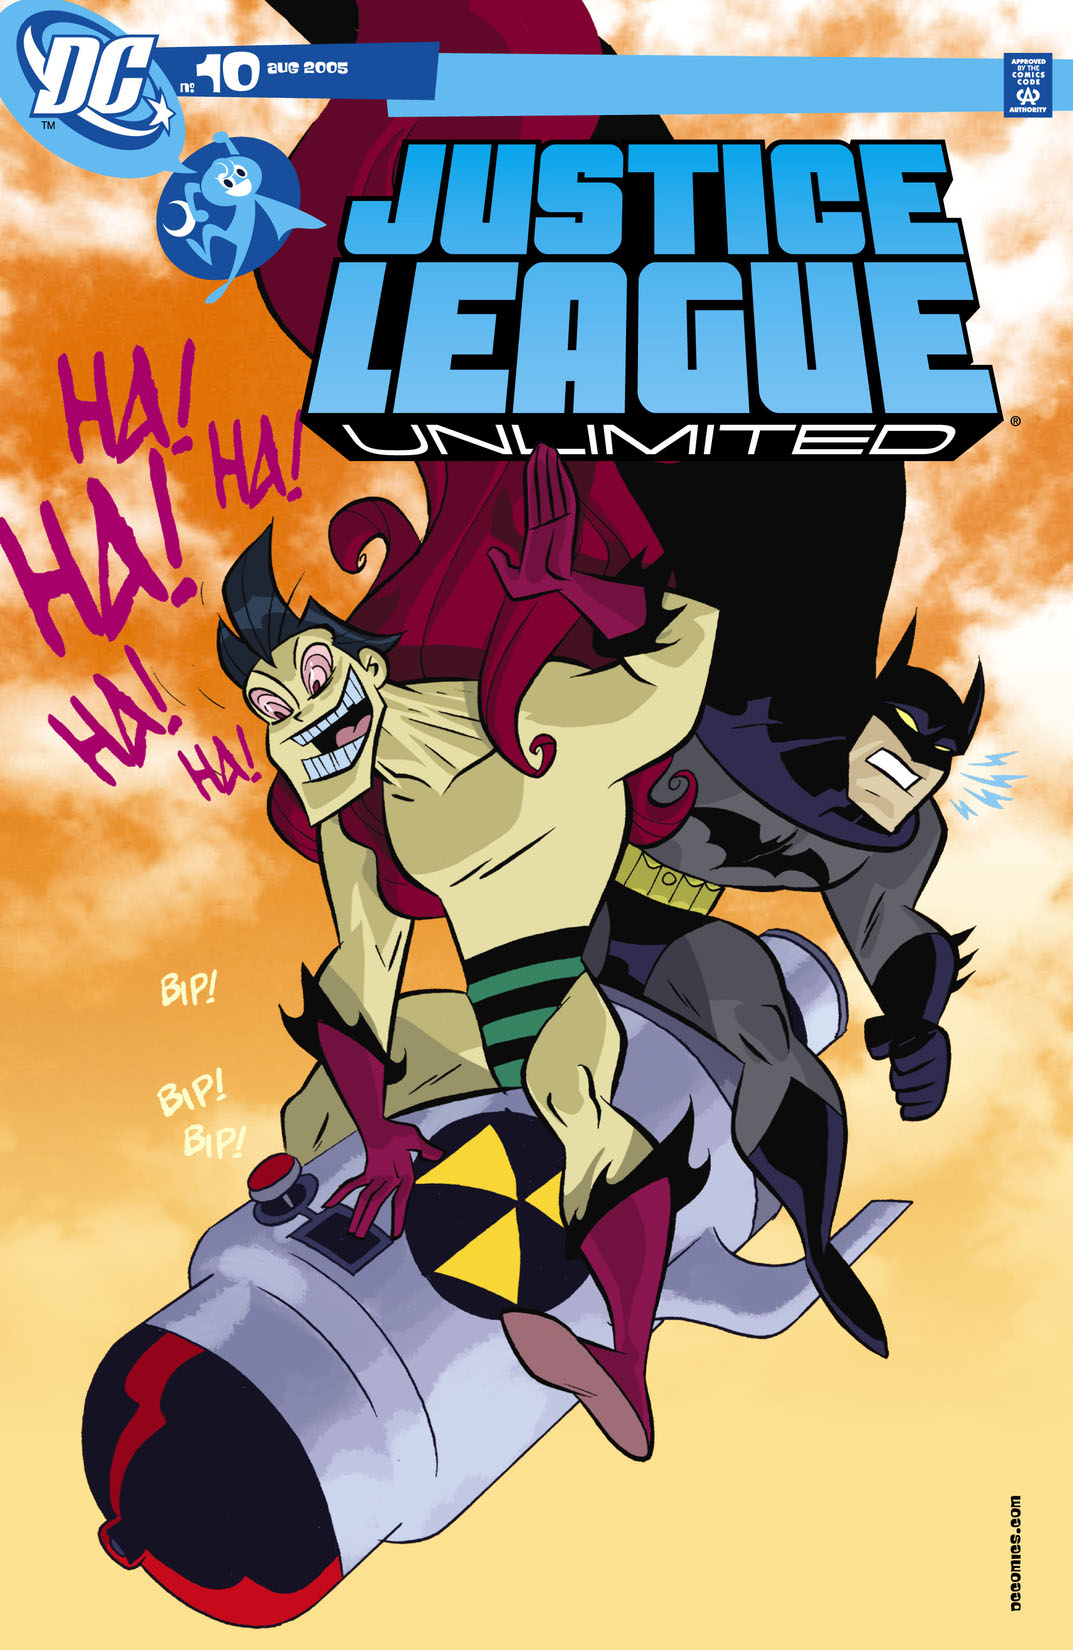 Justice League Unlimited #10 preview images